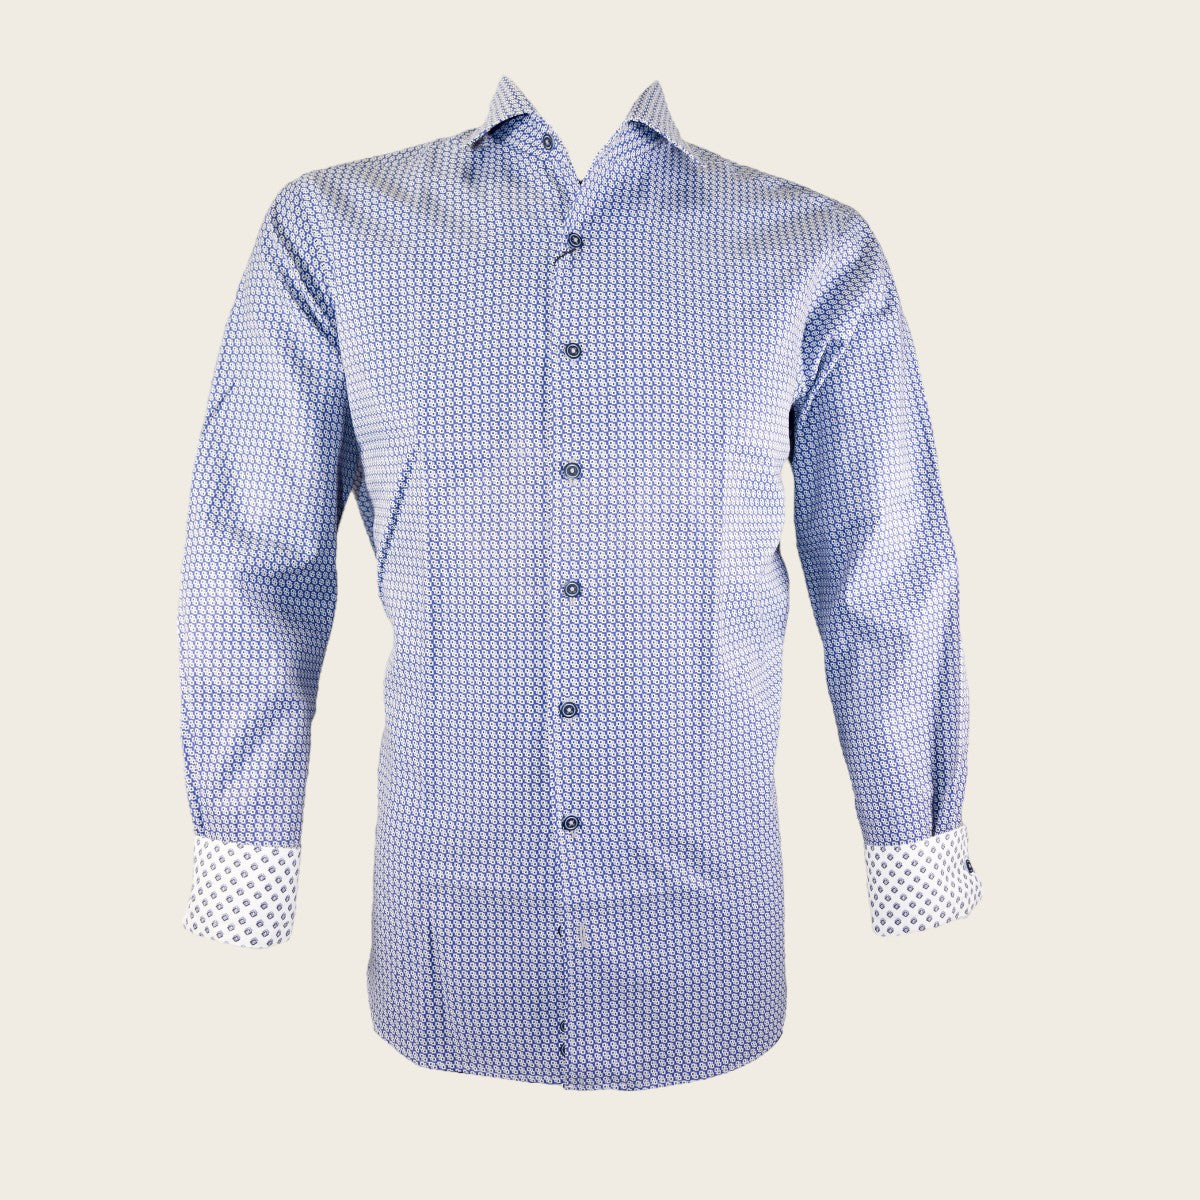 Blue shirt for men with organic motifs